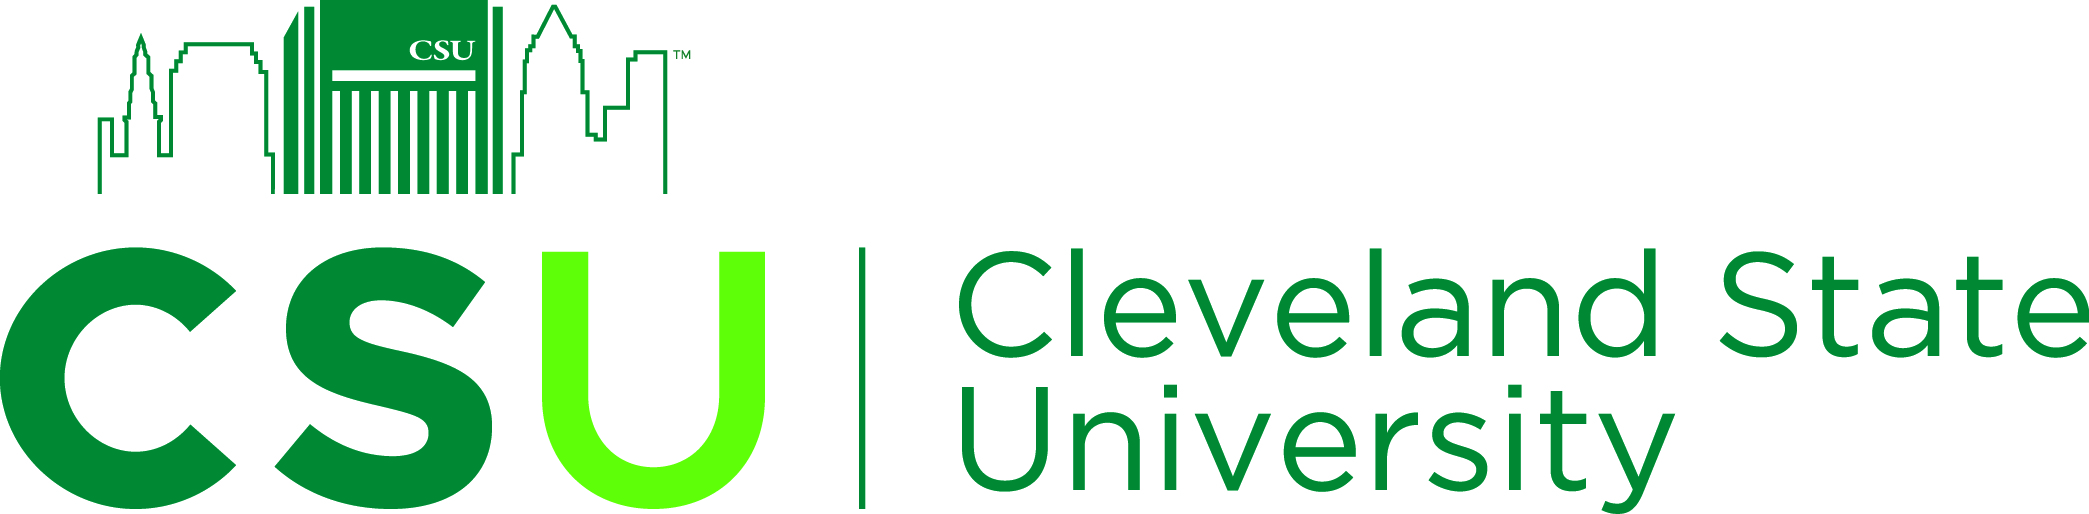 Cleveland State Logo.jpeg